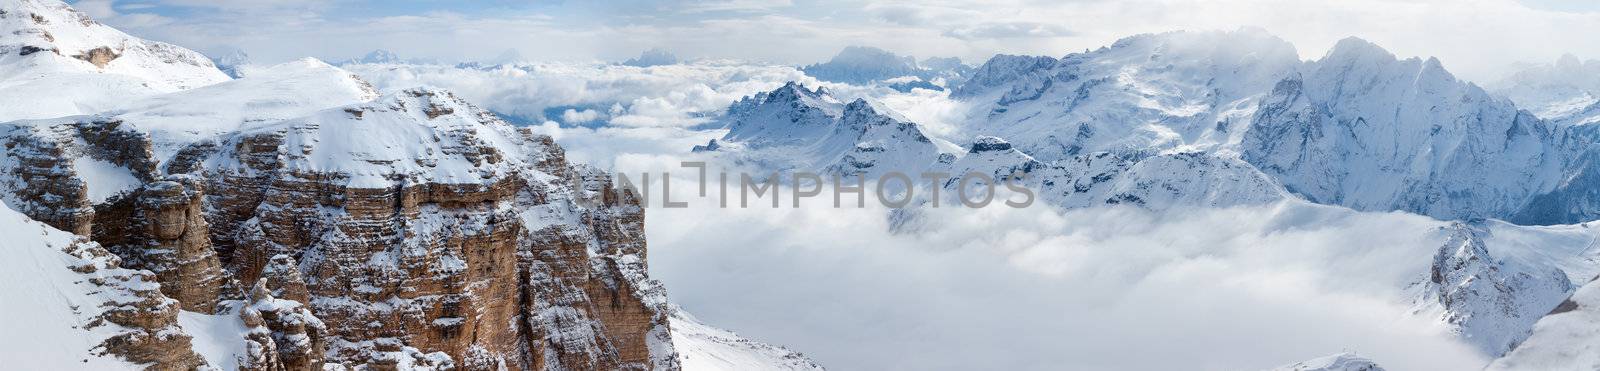 Winter mountains panorama by naumoid